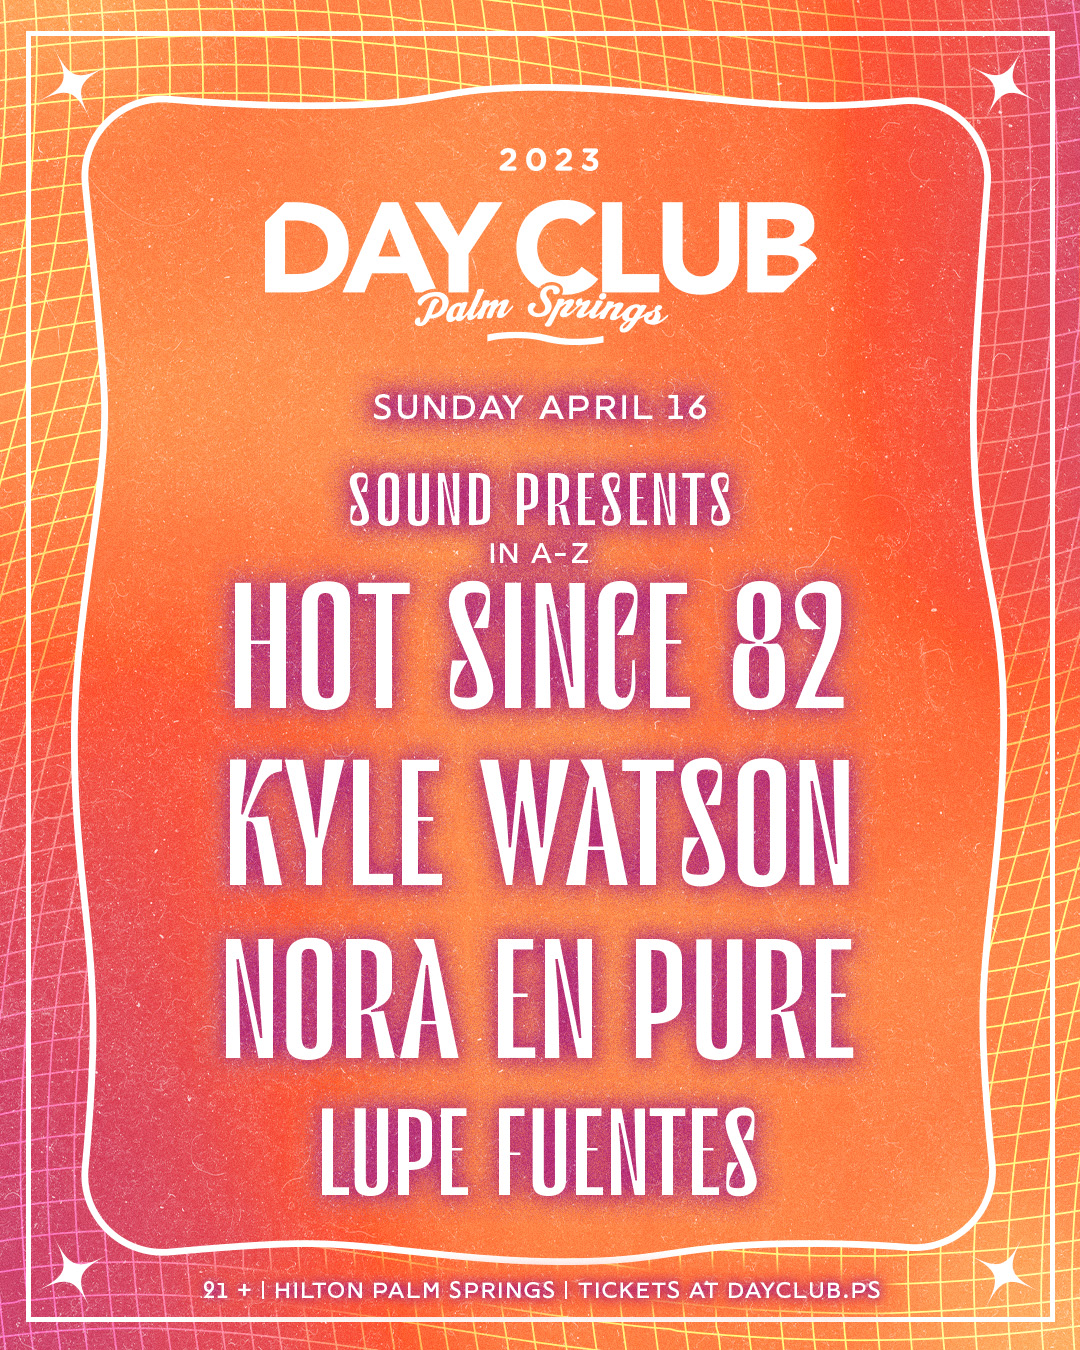 Day Club Palm Springs